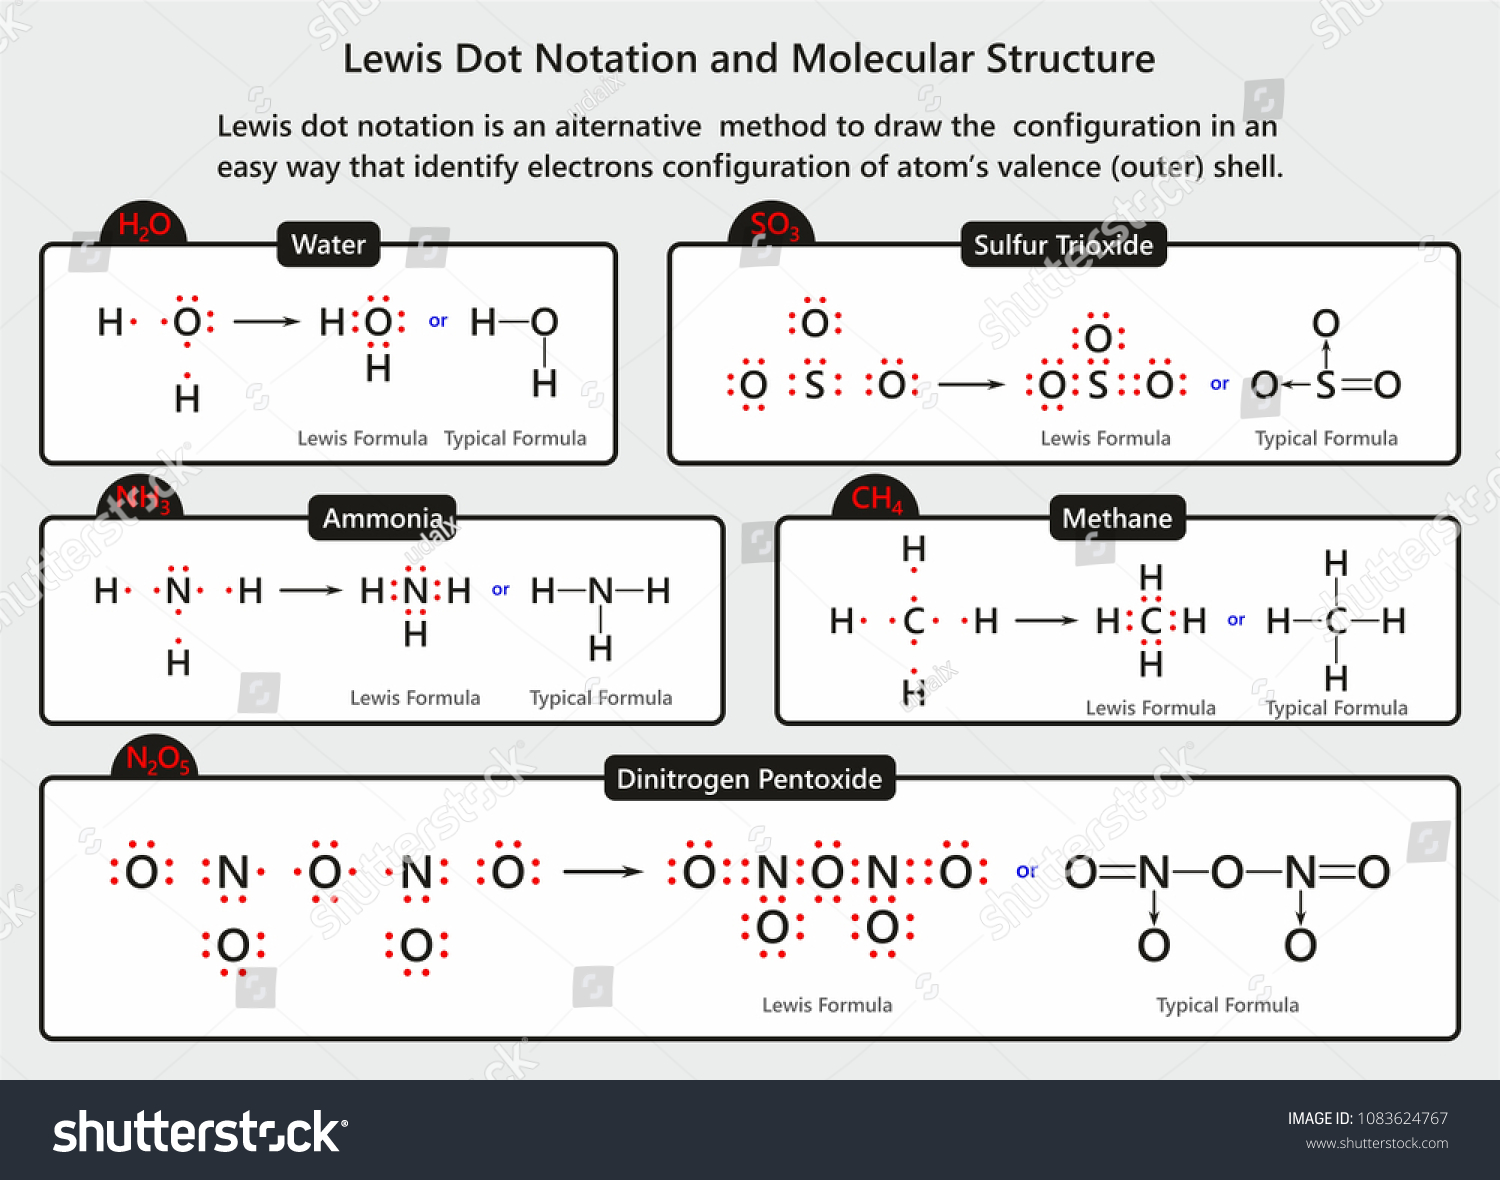 Lewis Dot Notation Molecular Structure Infographic: стоковая иллюстрация, 1...